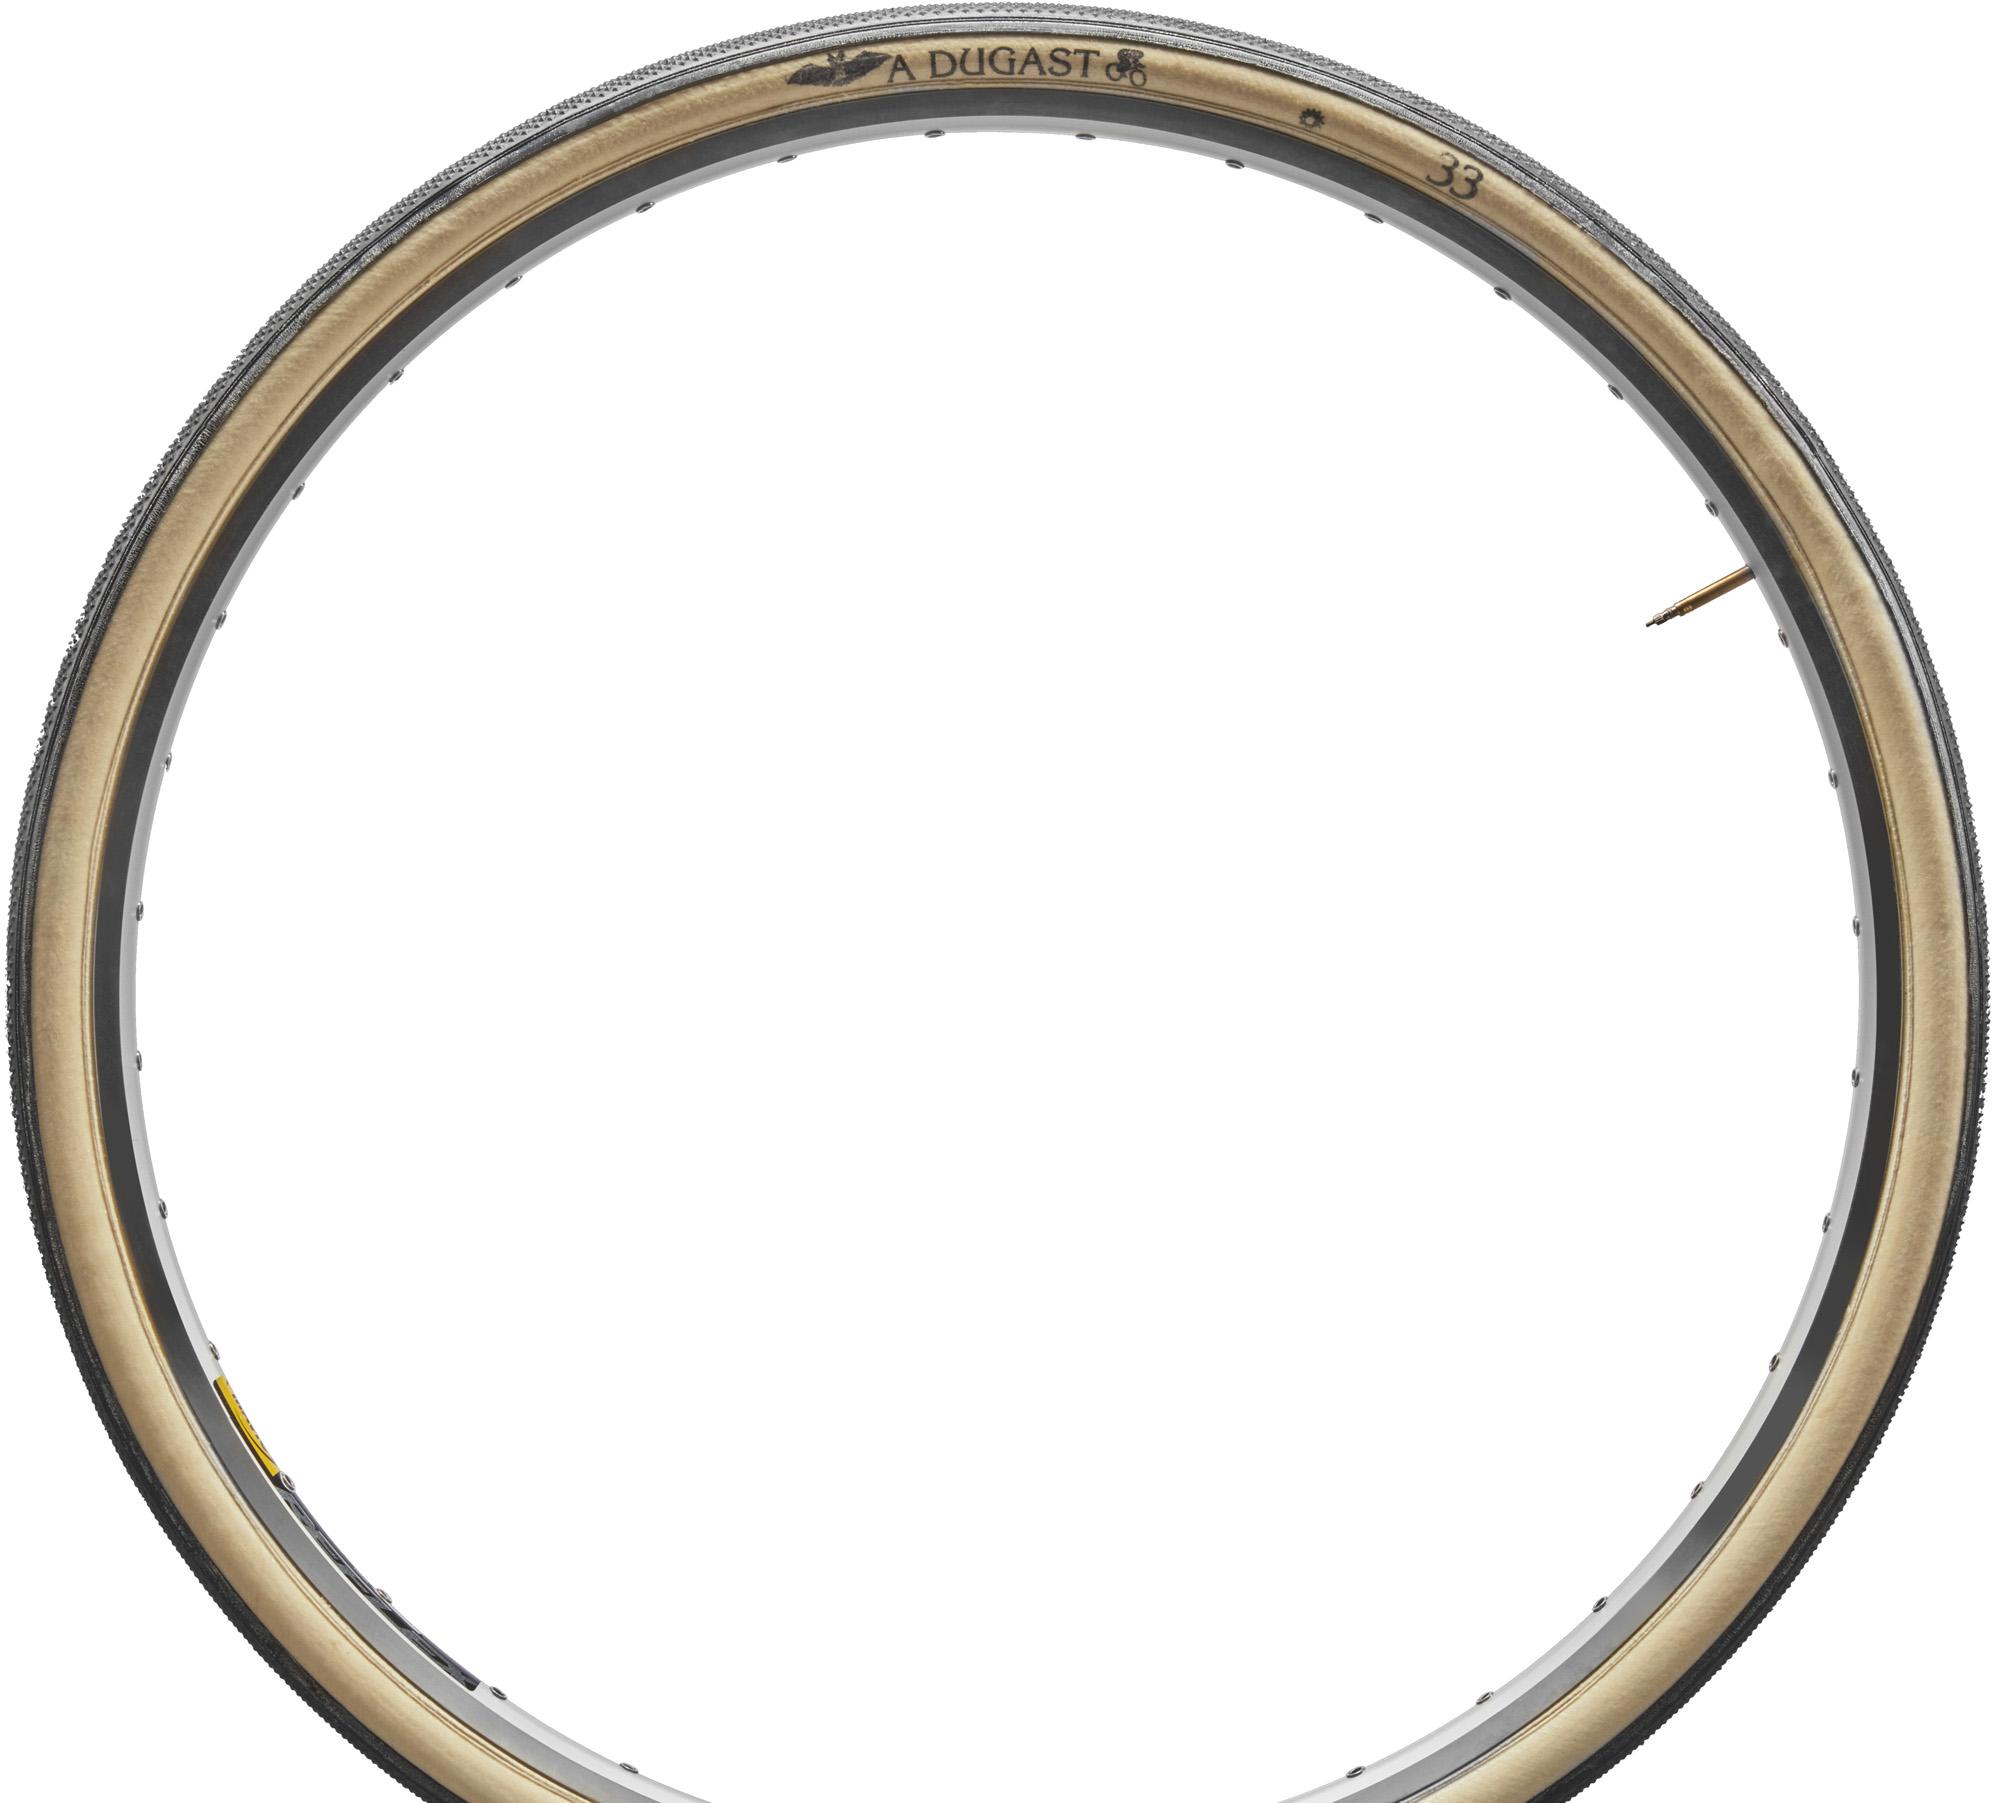 Image of Dugast Pipistrello Neoprene Cyclocross Tyre - Black/Tan Wall